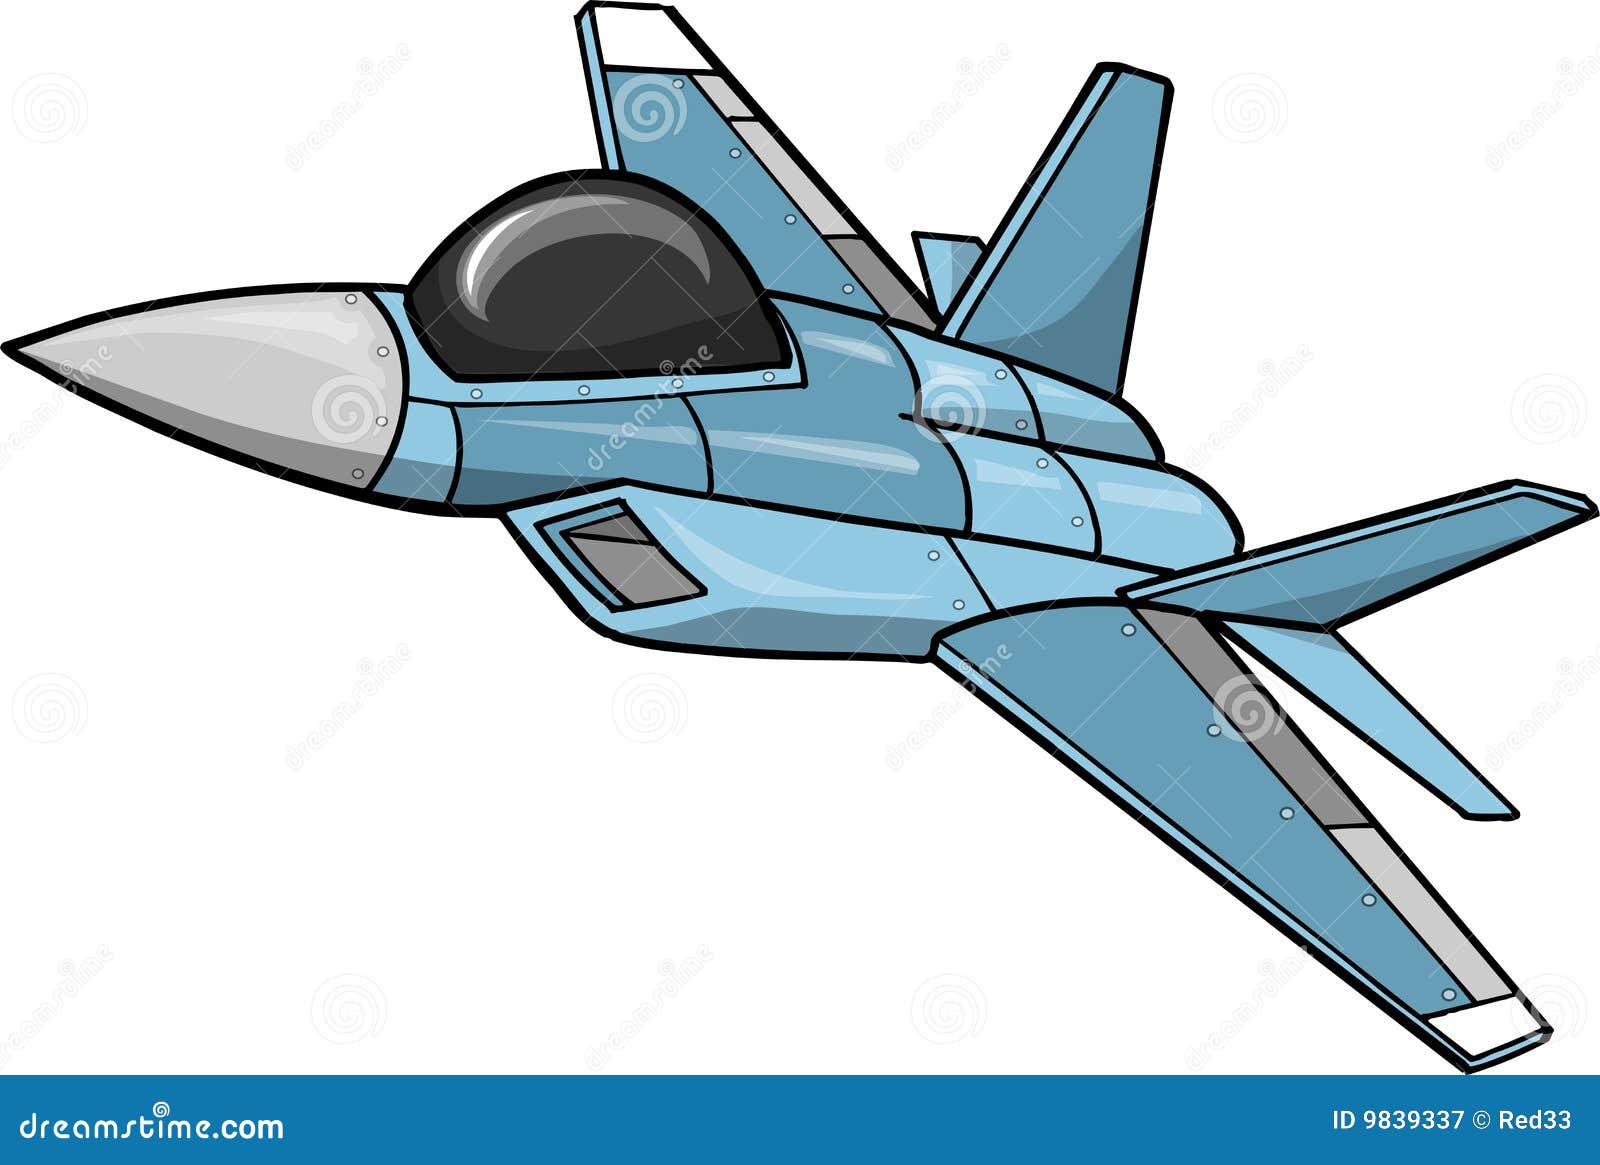 jet fighter  